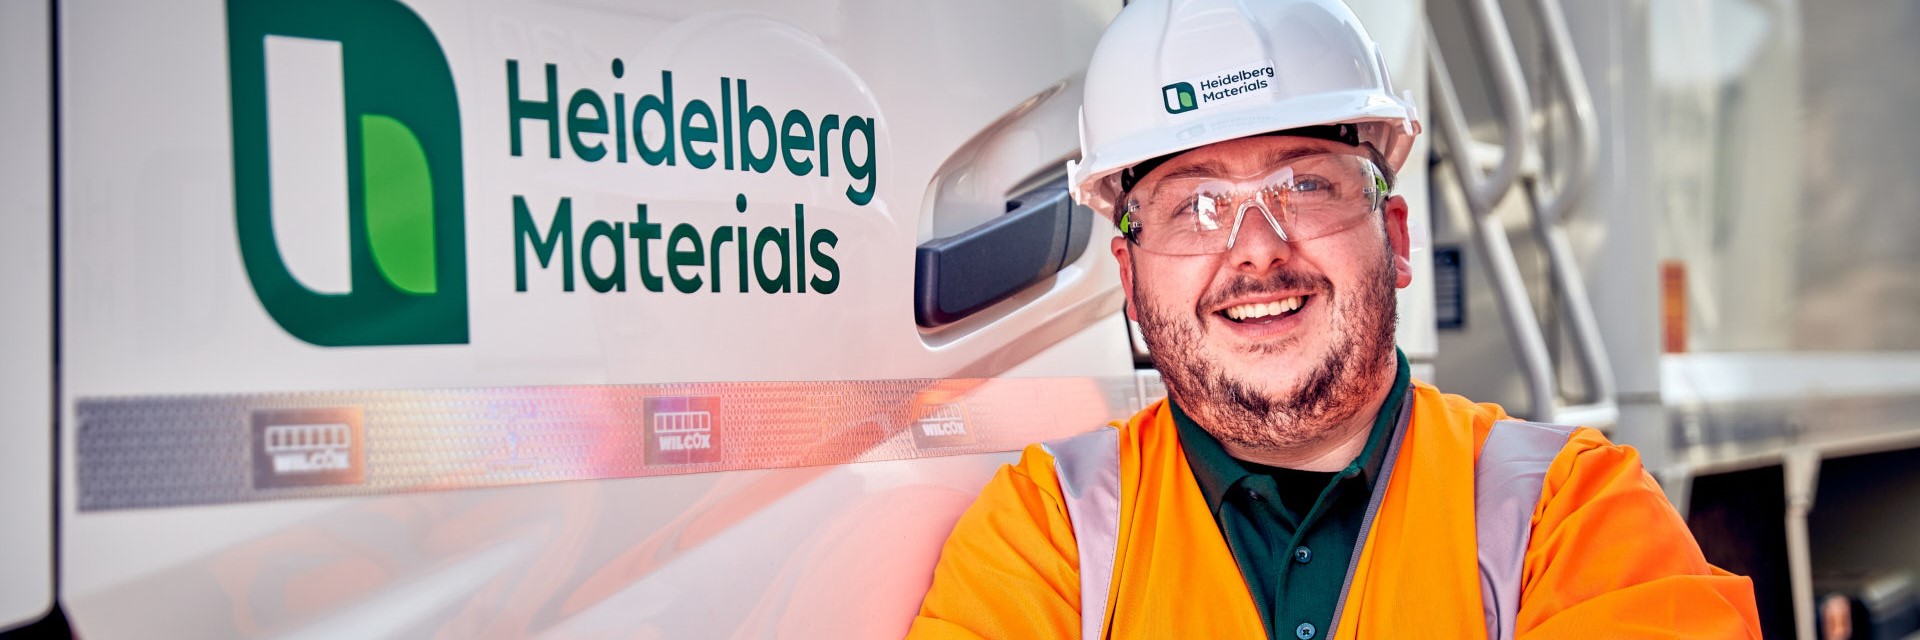 Heidelberg Materials drivers